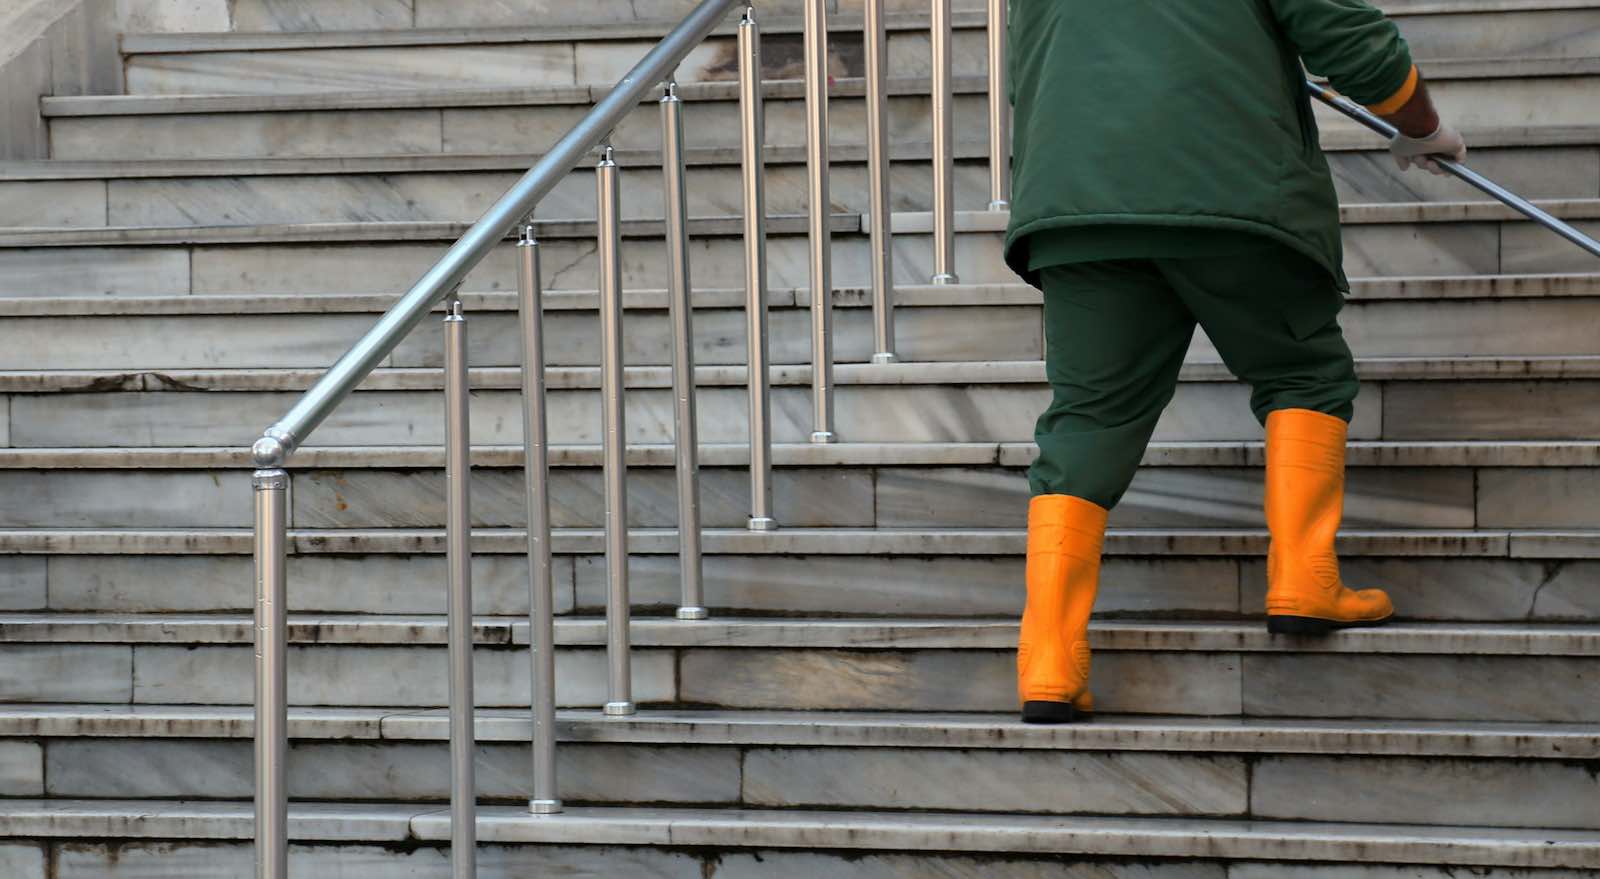 Originalfoto: <a href="https://unsplash.com/@sahinsezerdincer?utm_content=creditCopyText&utm_medium=referral&utm_source=unsplash">Şahin Sezer Dinçer</a> på <a href="https://unsplash.com/photos/person-in-green-jacket-and-brown-pants-walking-on-gray-concrete-stairs-oglBmXuiClc?utm_content=creditCopyText&utm_medium=referral&utm_source=unsplash">Unsplash</a>   